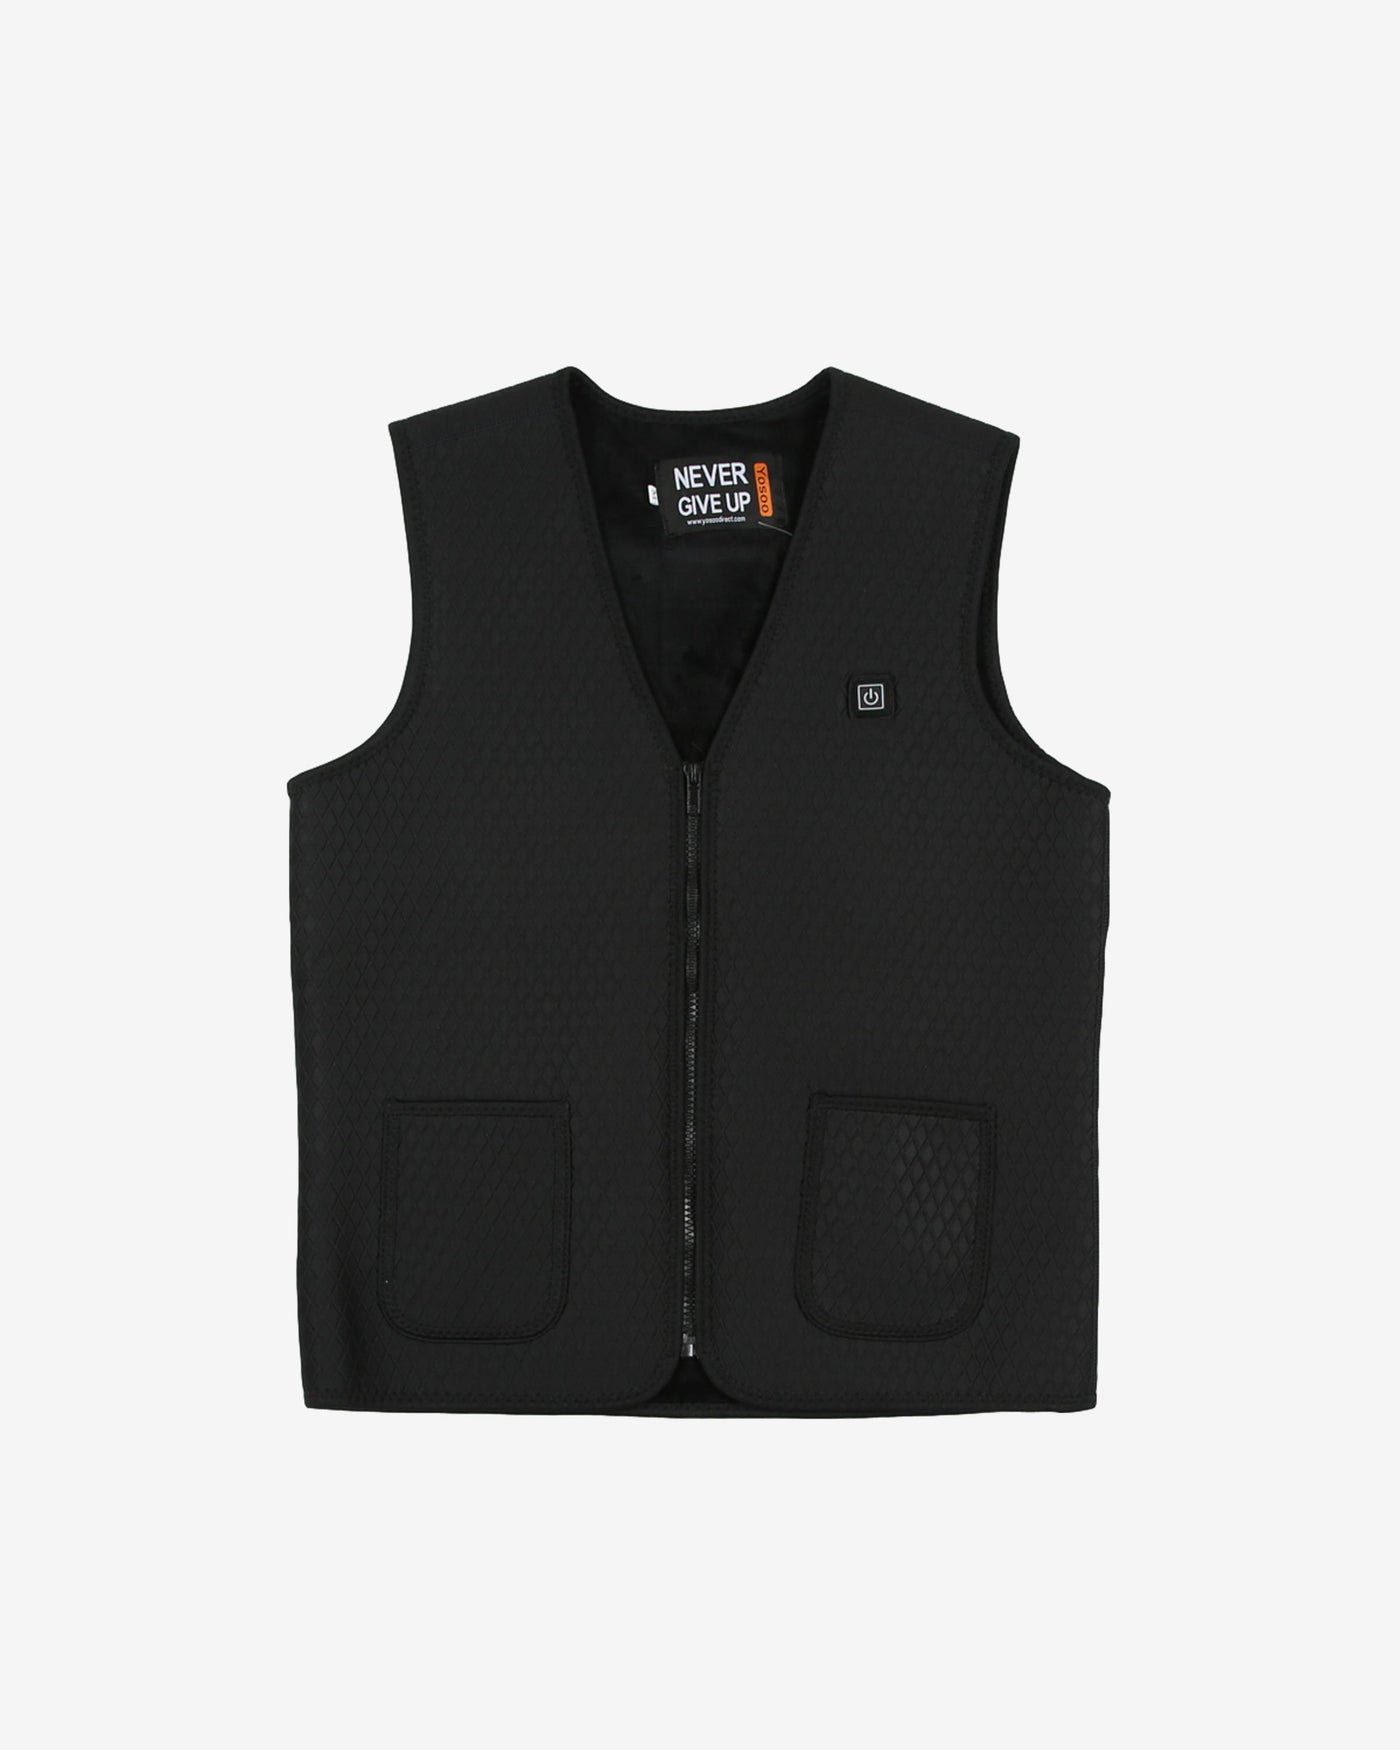 yosoo black motorcycle heated vest jacket - m